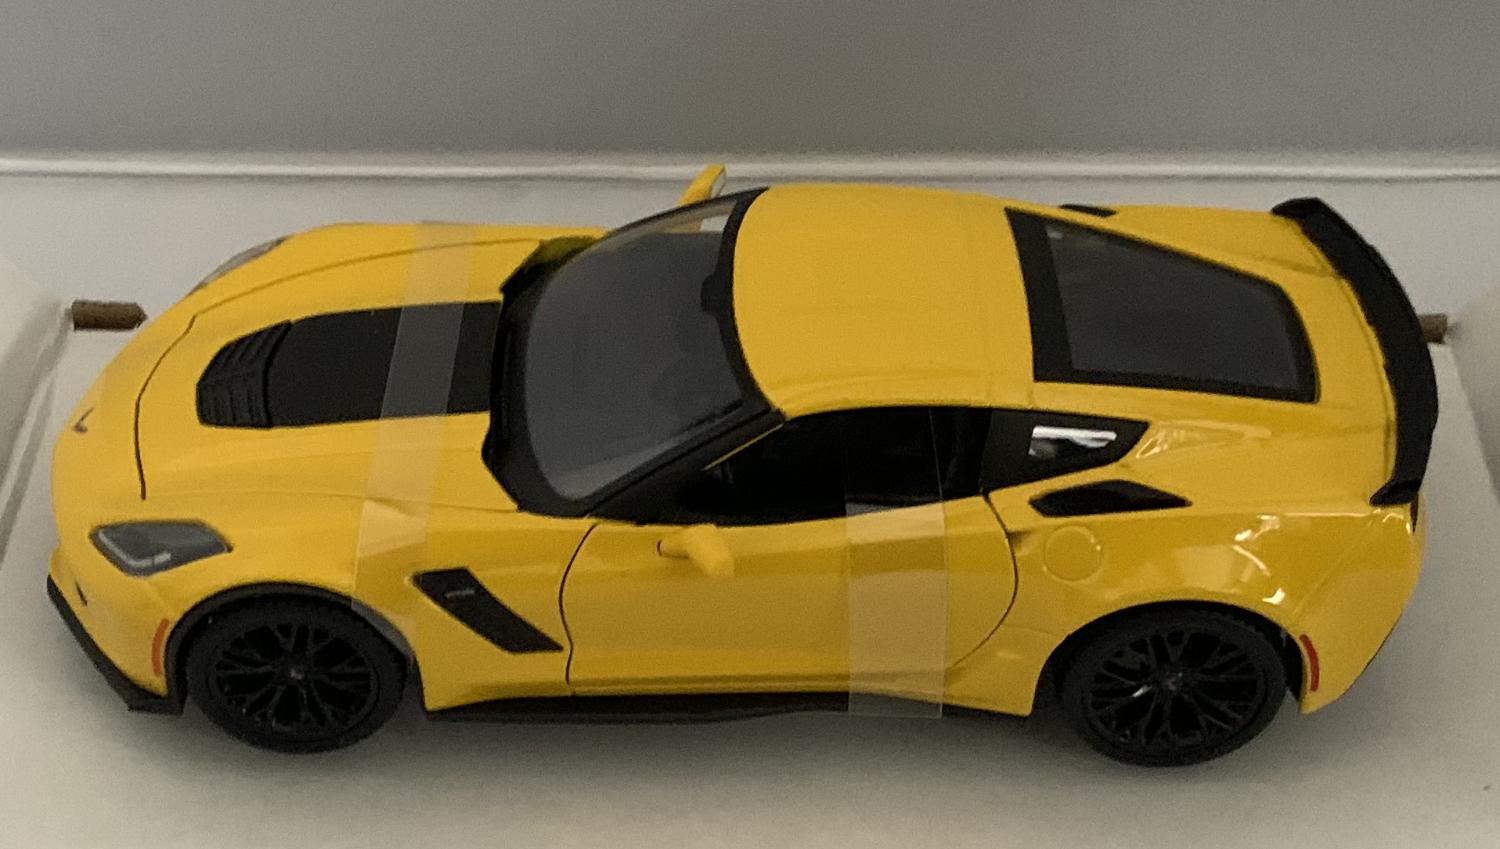 Chevrolet Corvette Z06 2015 in yellow 1:24 scale model from Maisto